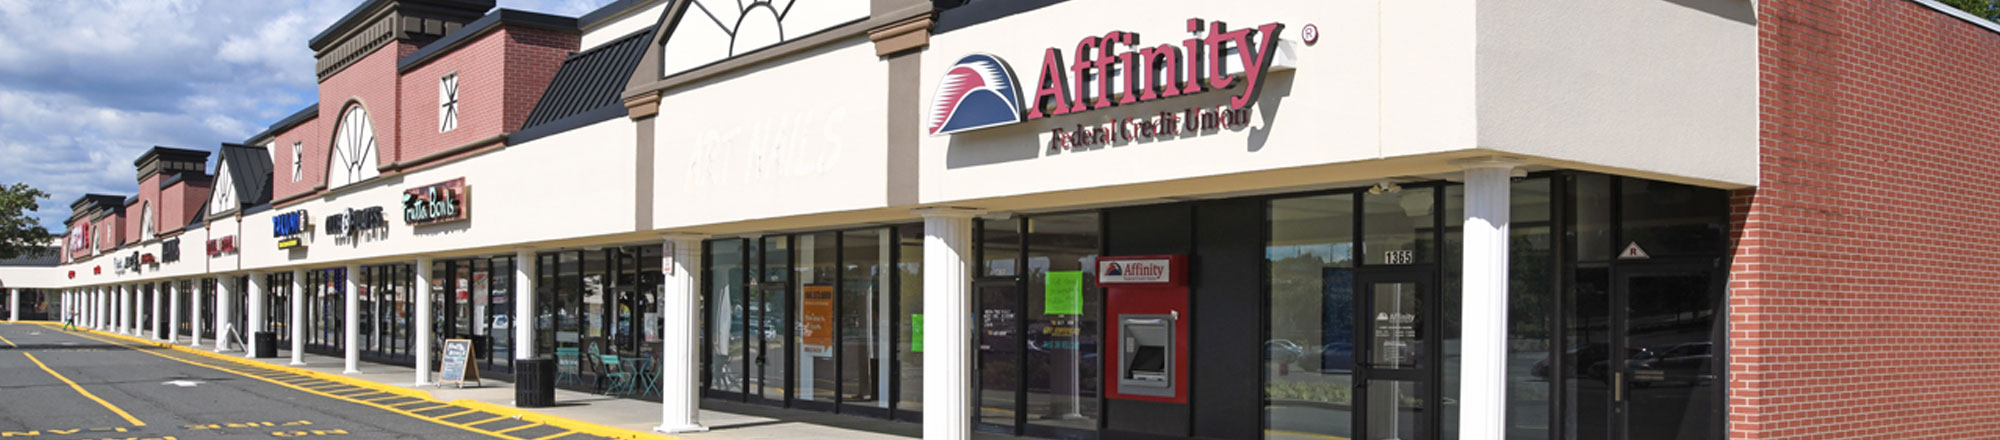 Affinity branch Middletown, NJ